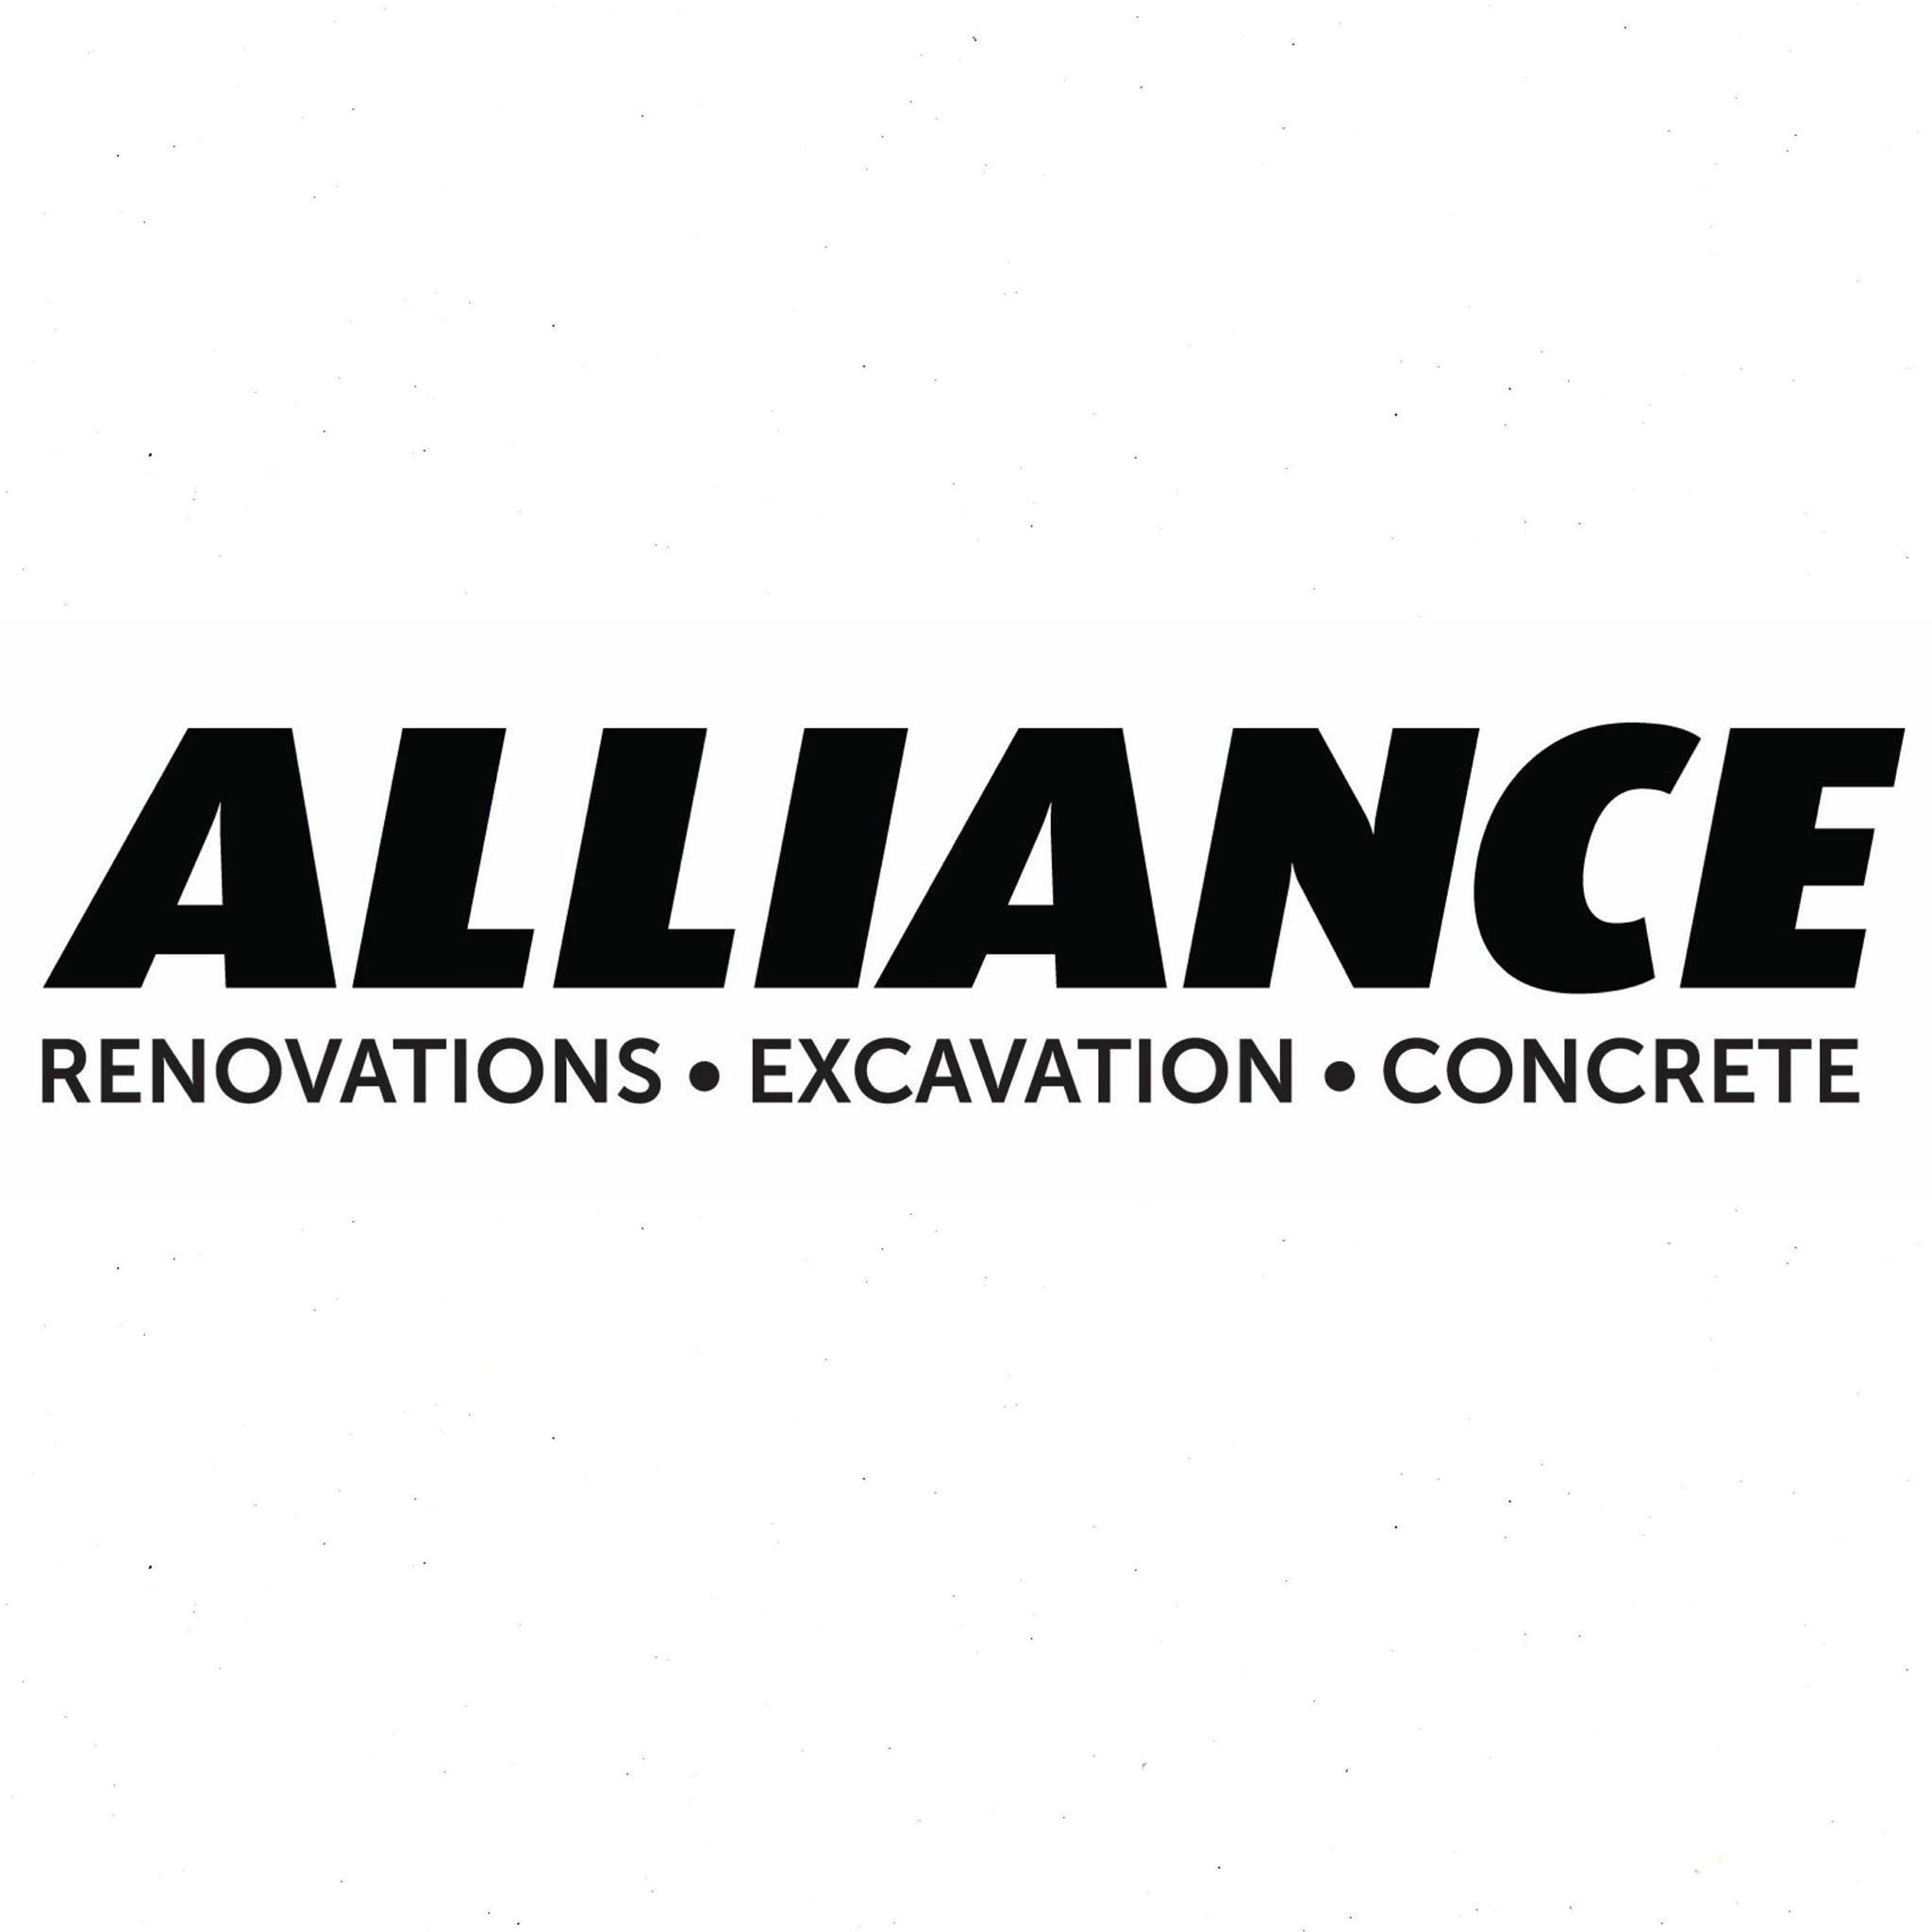 Alliance Renovations